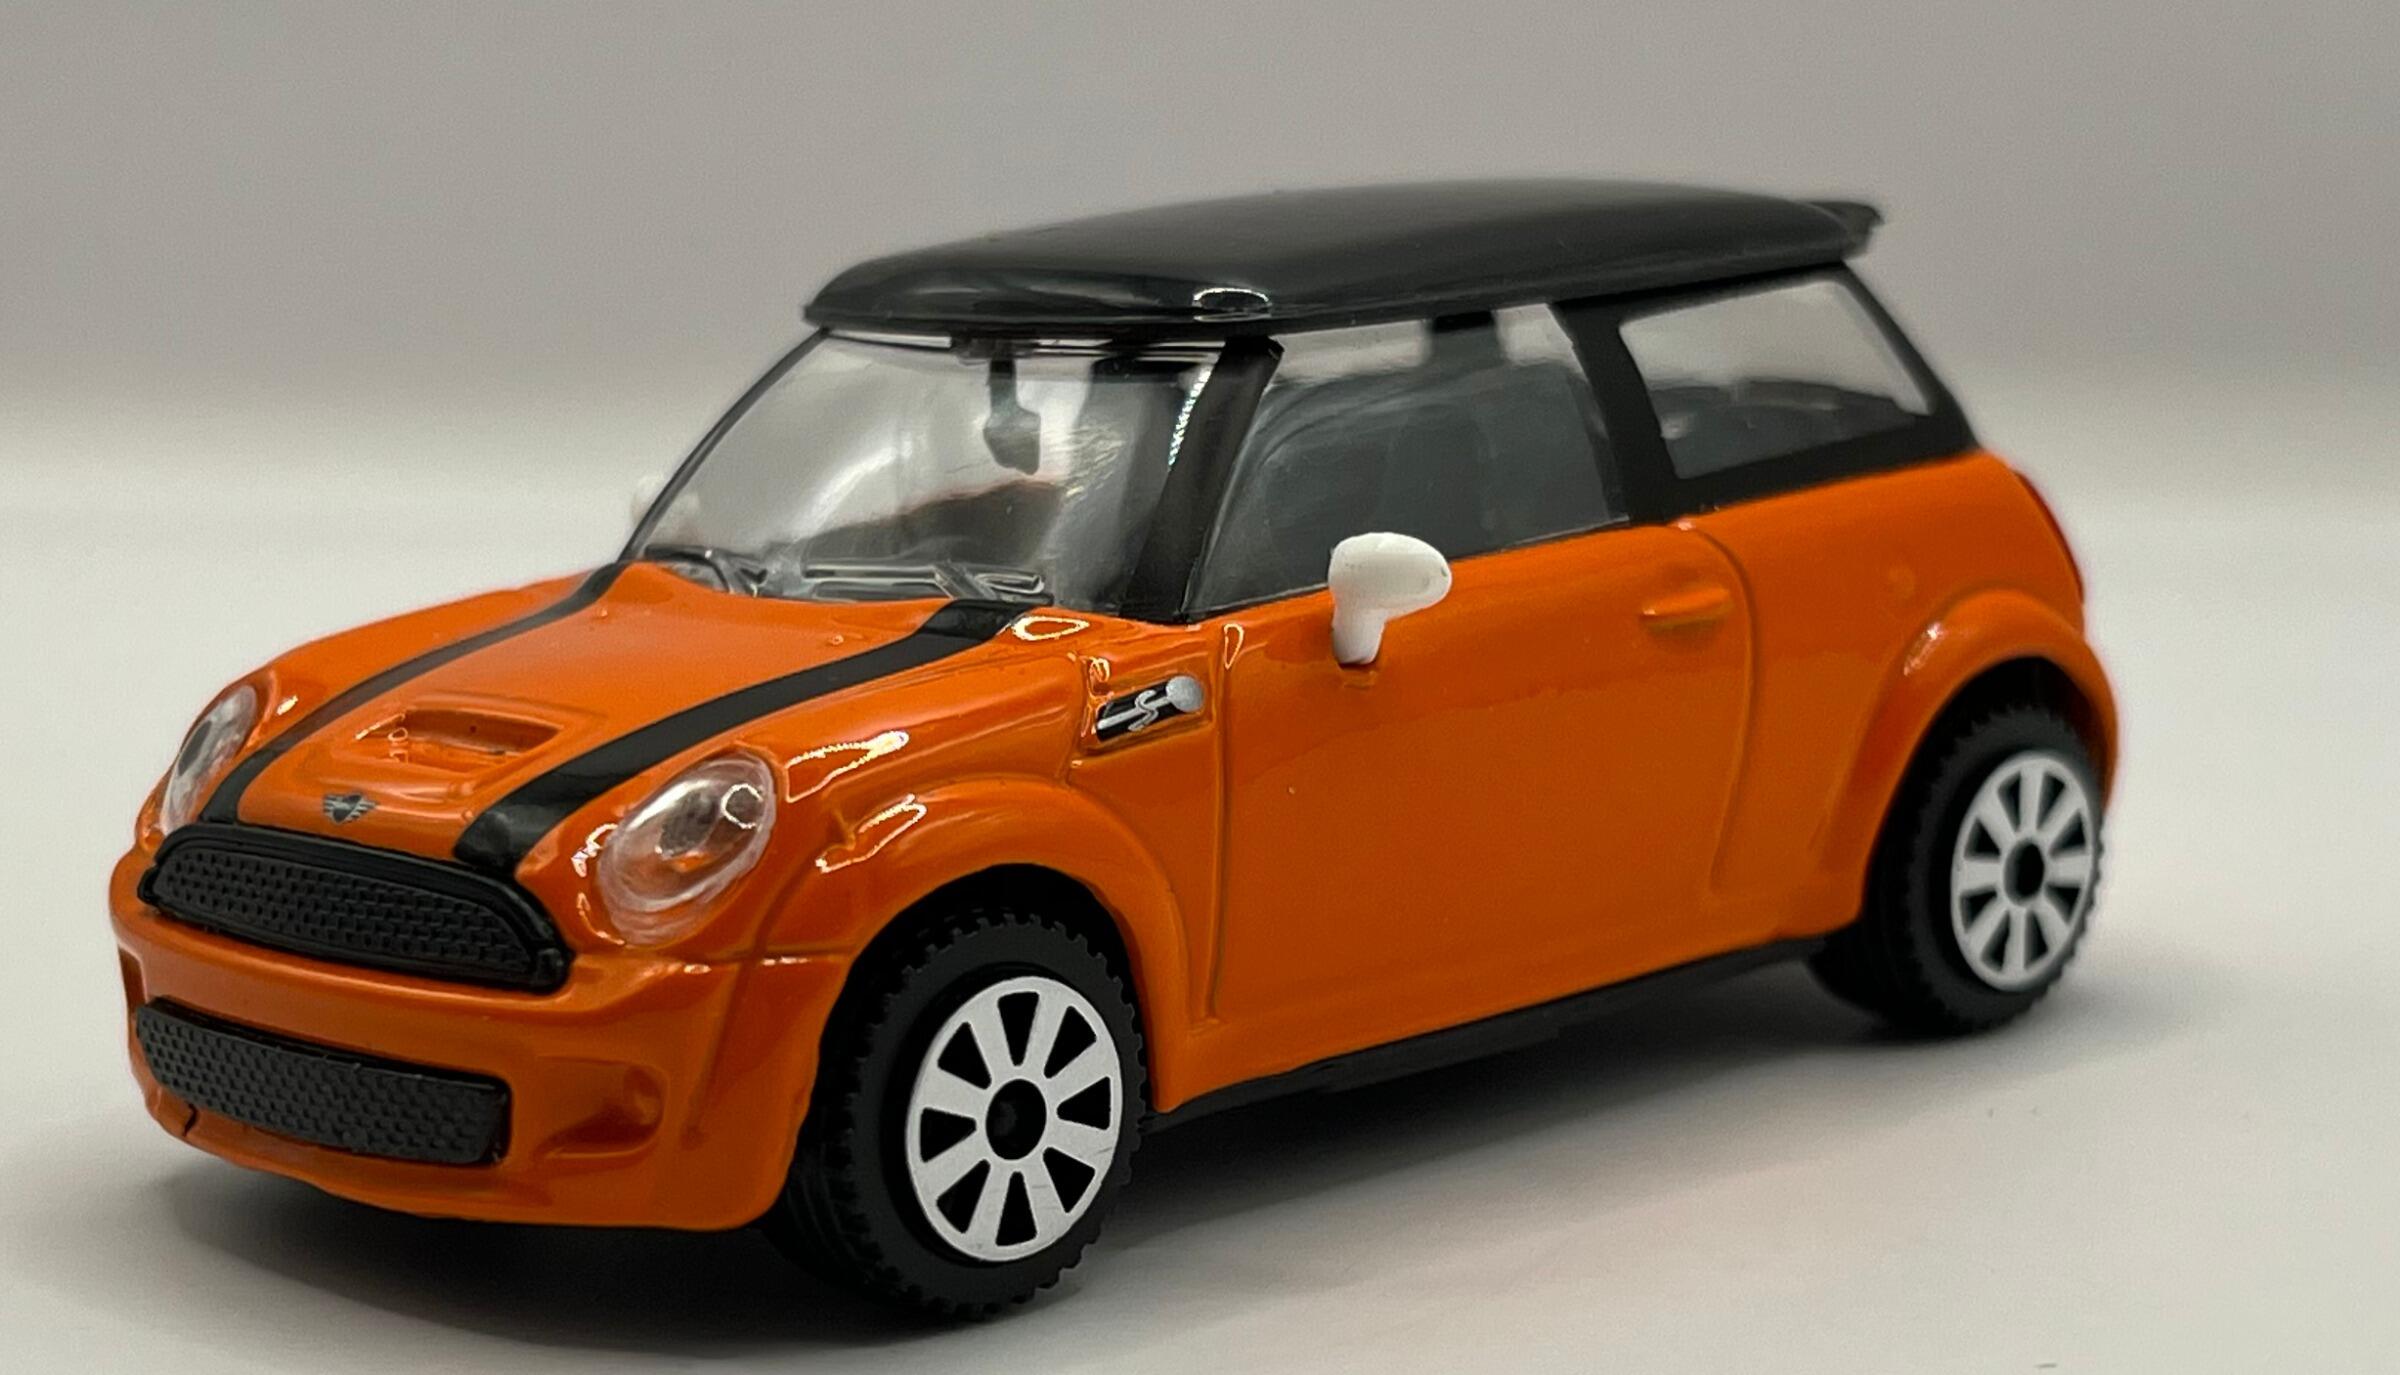 Mini Cooper S in orange with black roof, 1:43 scale diecast car model ...